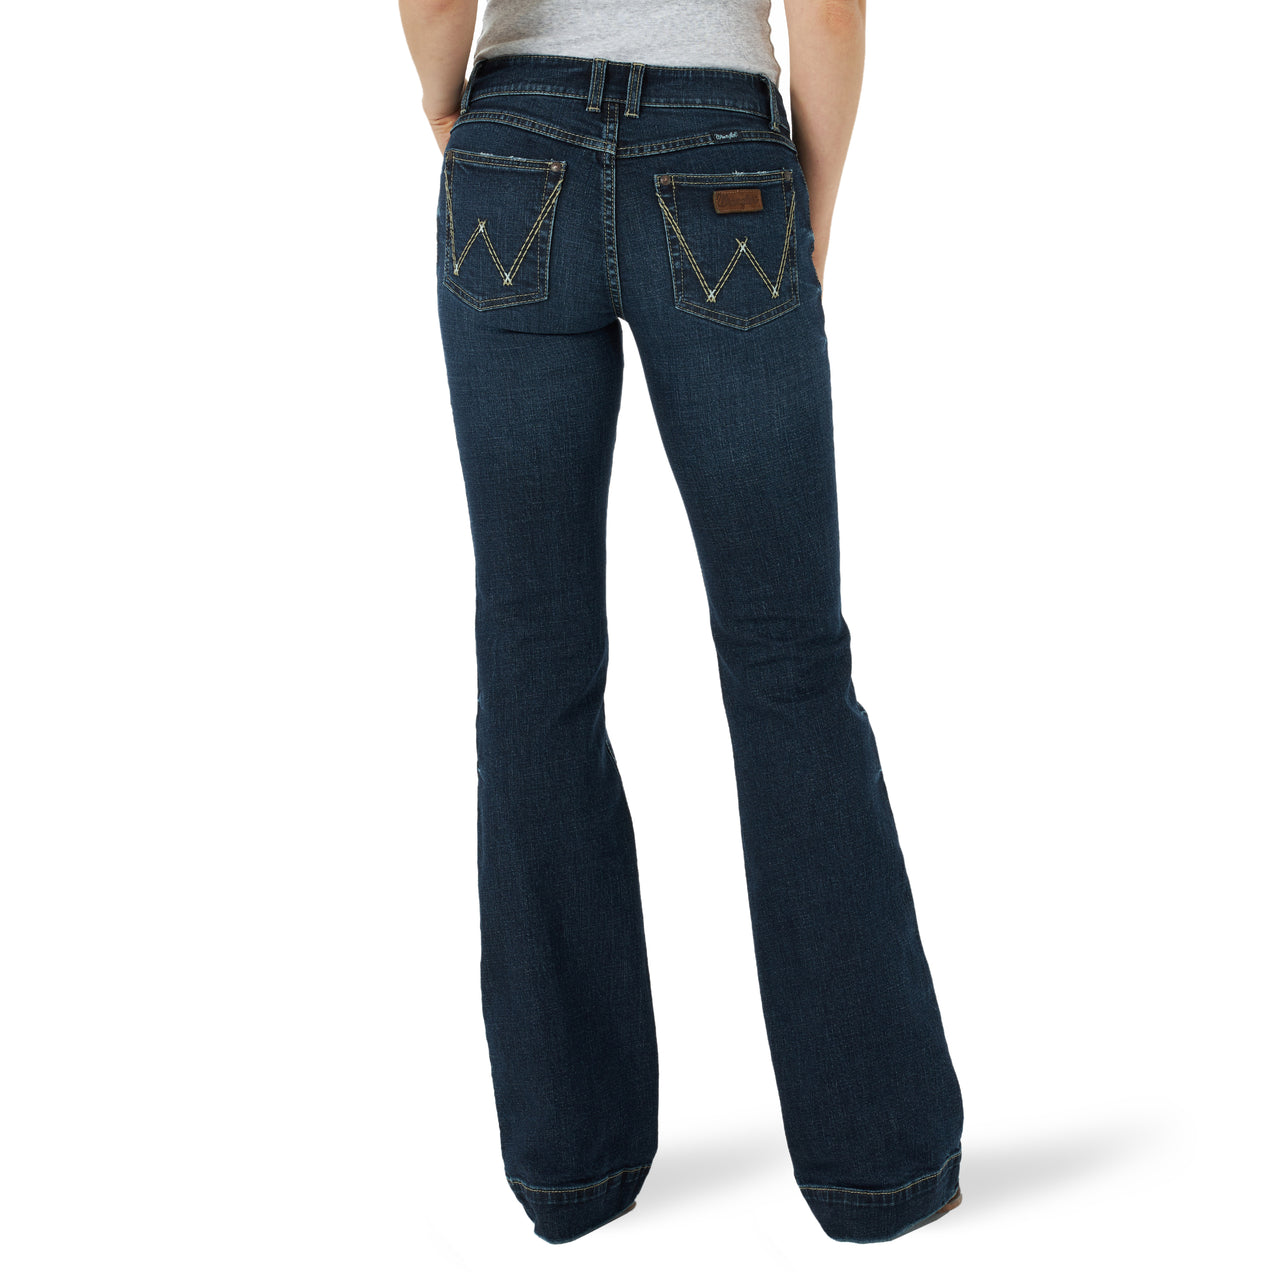 Wrangler Women's Retro Mae Mid Rise Trouser Jeans - Samantha